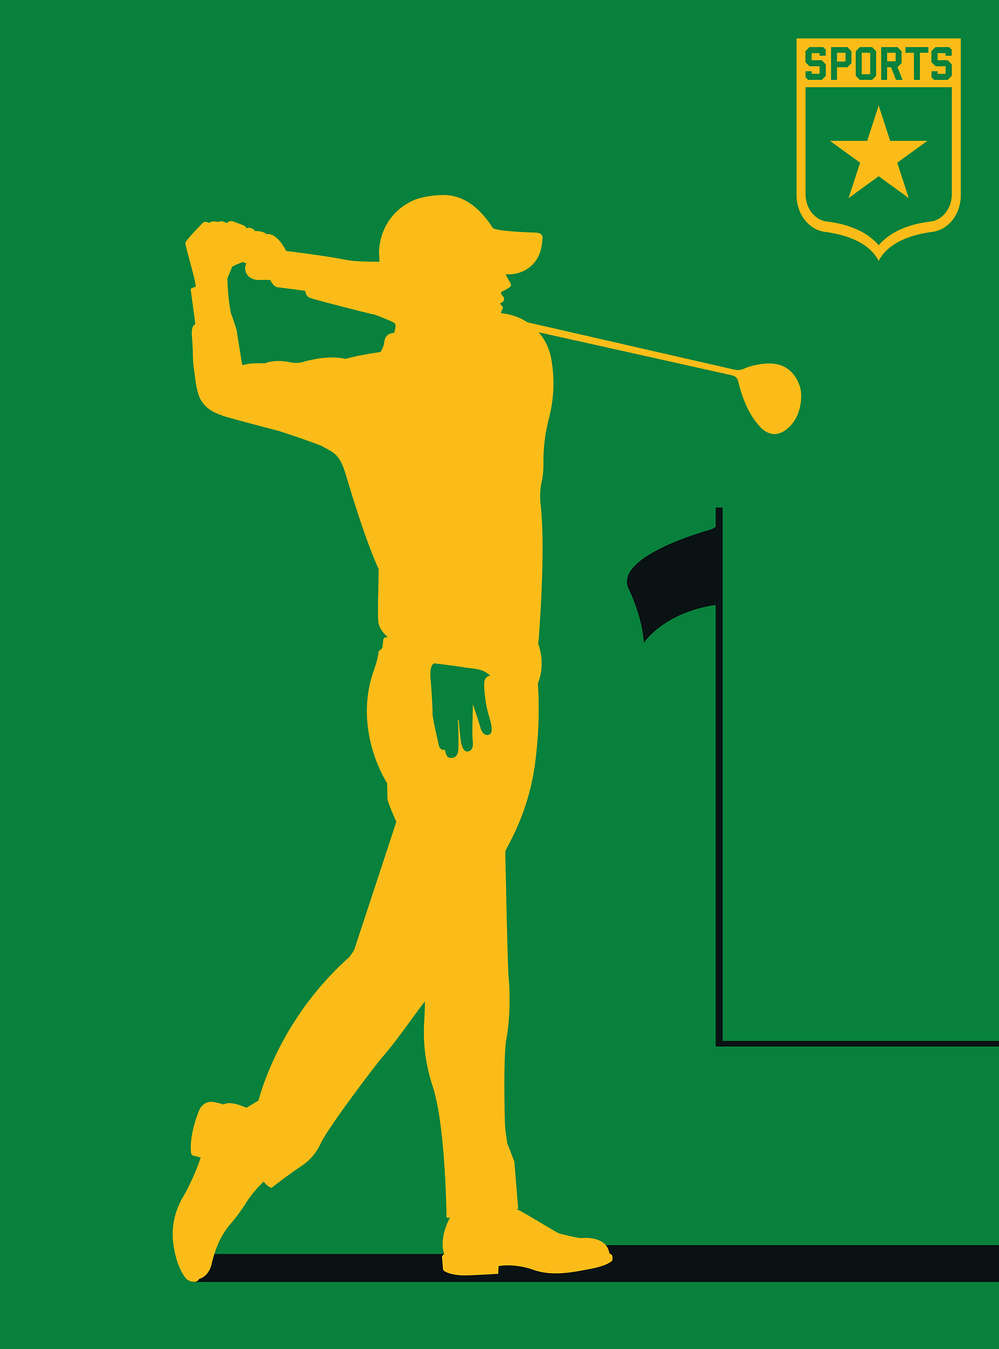             Fotomurali Sport Motivo Golf Icona Giocatore
        